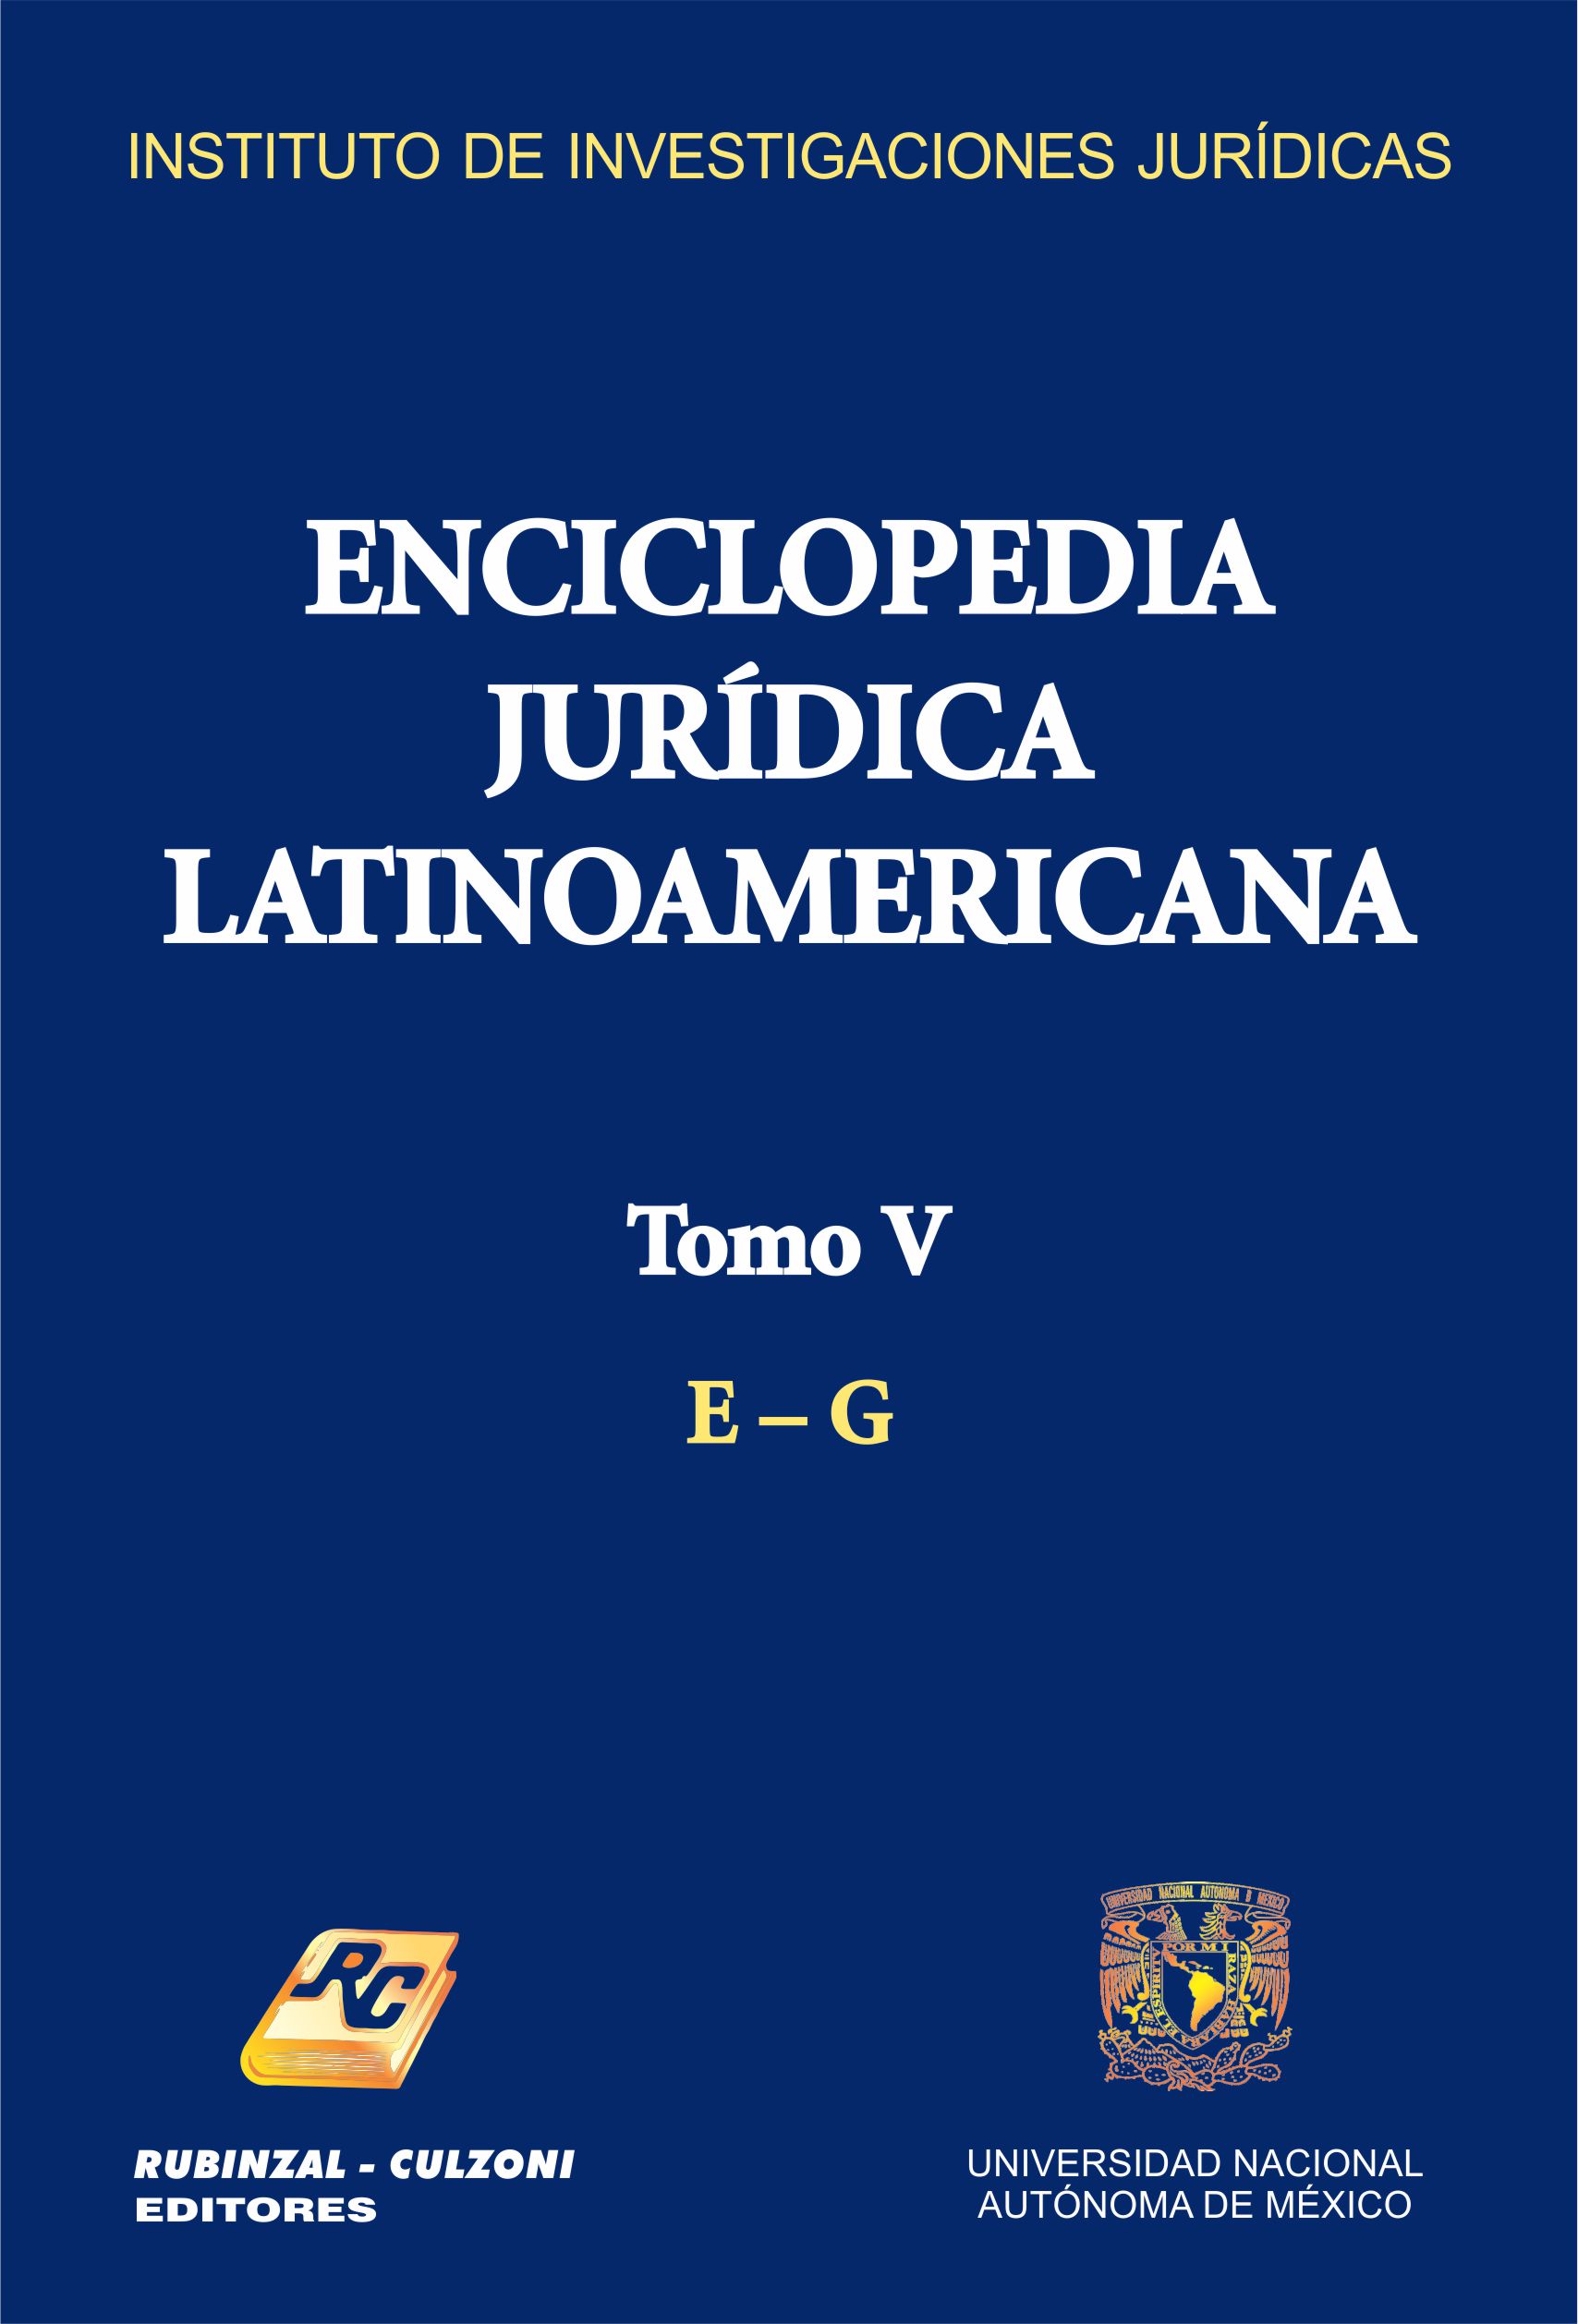 Enciclopedia Jurídica Latinoamericana. - Tomo V (E - G).